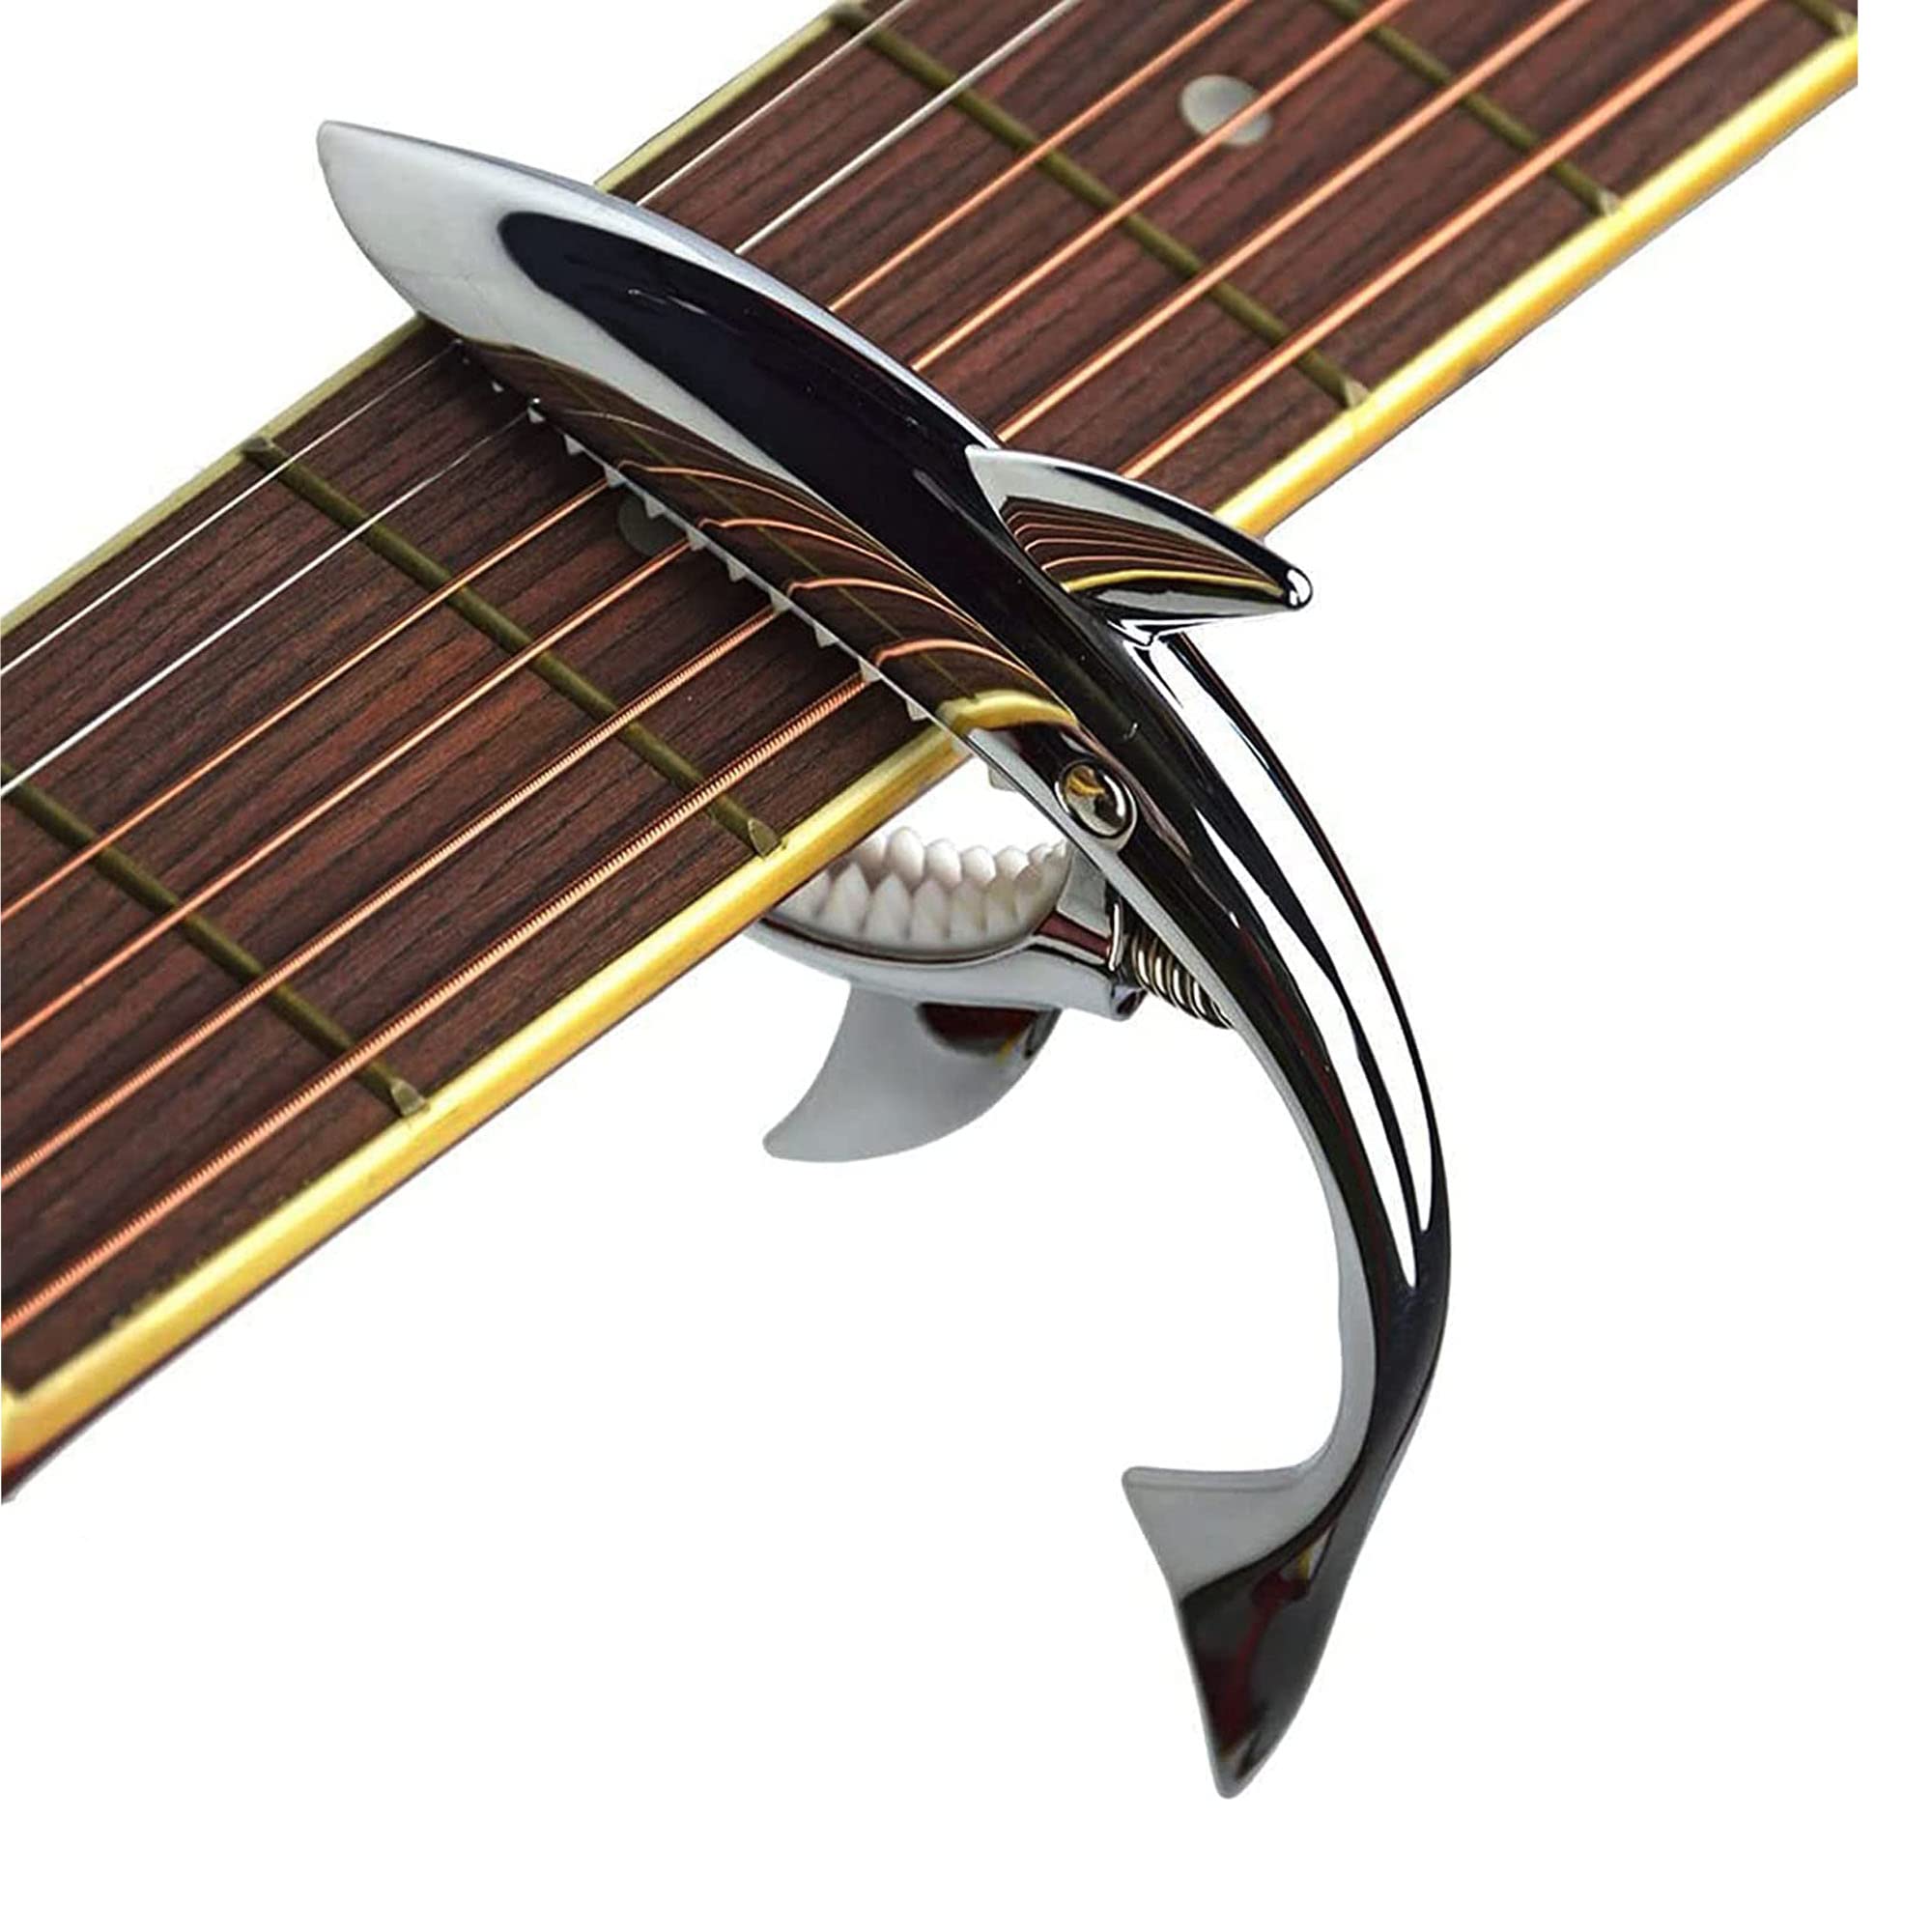 Guitar Capo For Acoustic Guitar, Electric Guitar, Western Guitar, Ukulele,  6+12 Strings, Hold On, Soft Pad, Shark Design